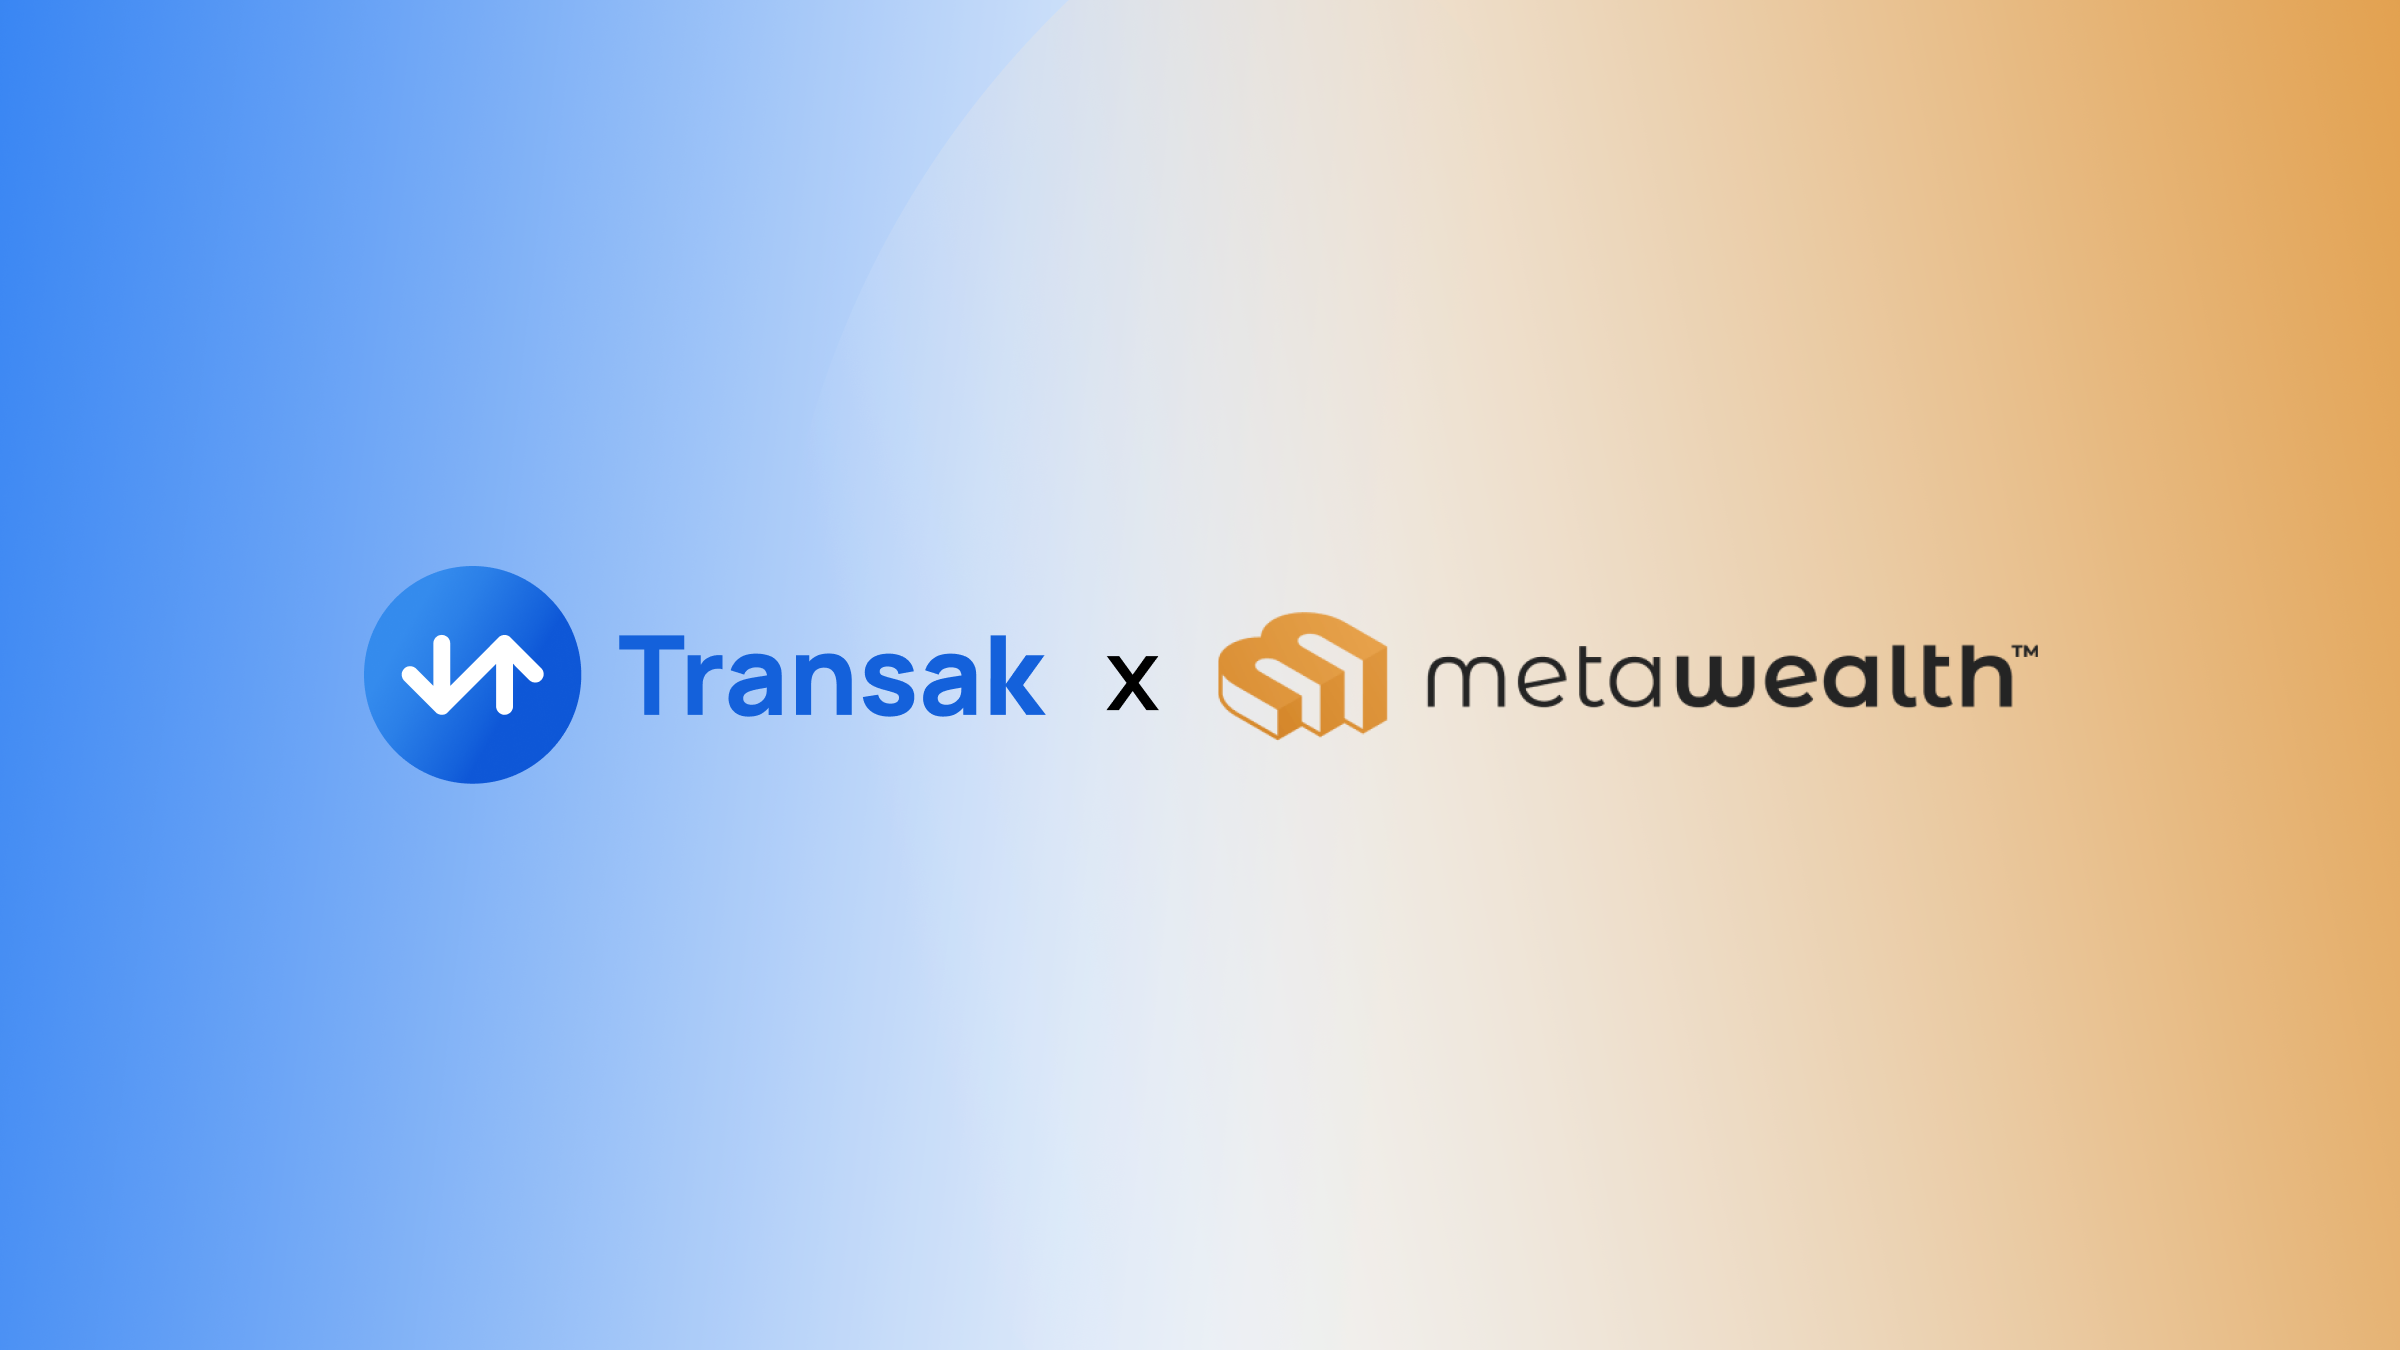 MetaWealth Partners with Transak to Simplify Asset Tokenization for Mainstream Investors